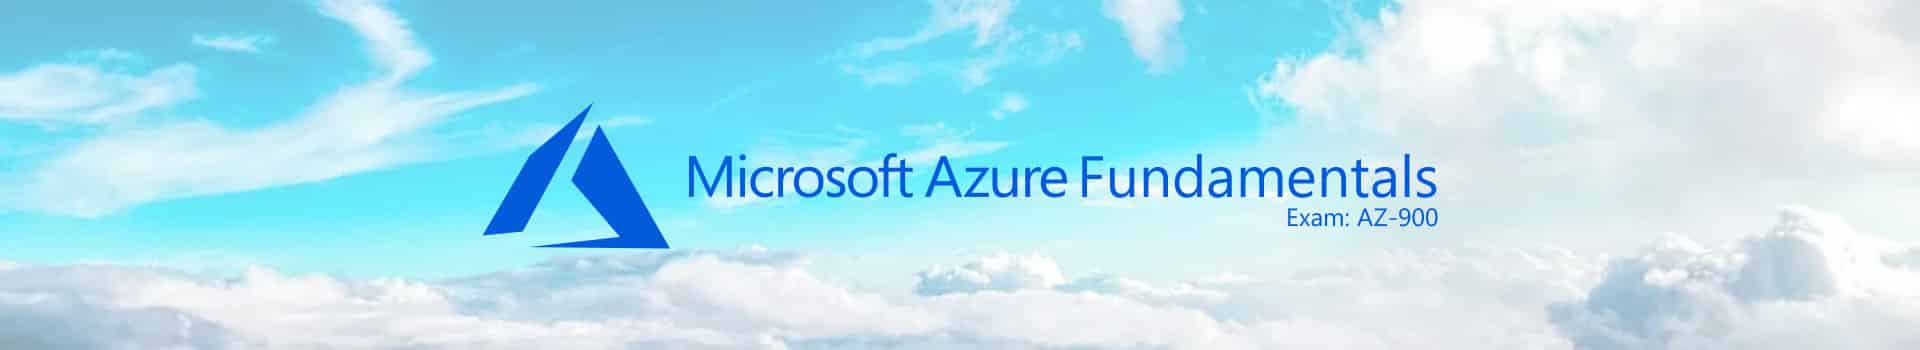 Microsoft Azure Fundamentals Certification Training Philippines Banner